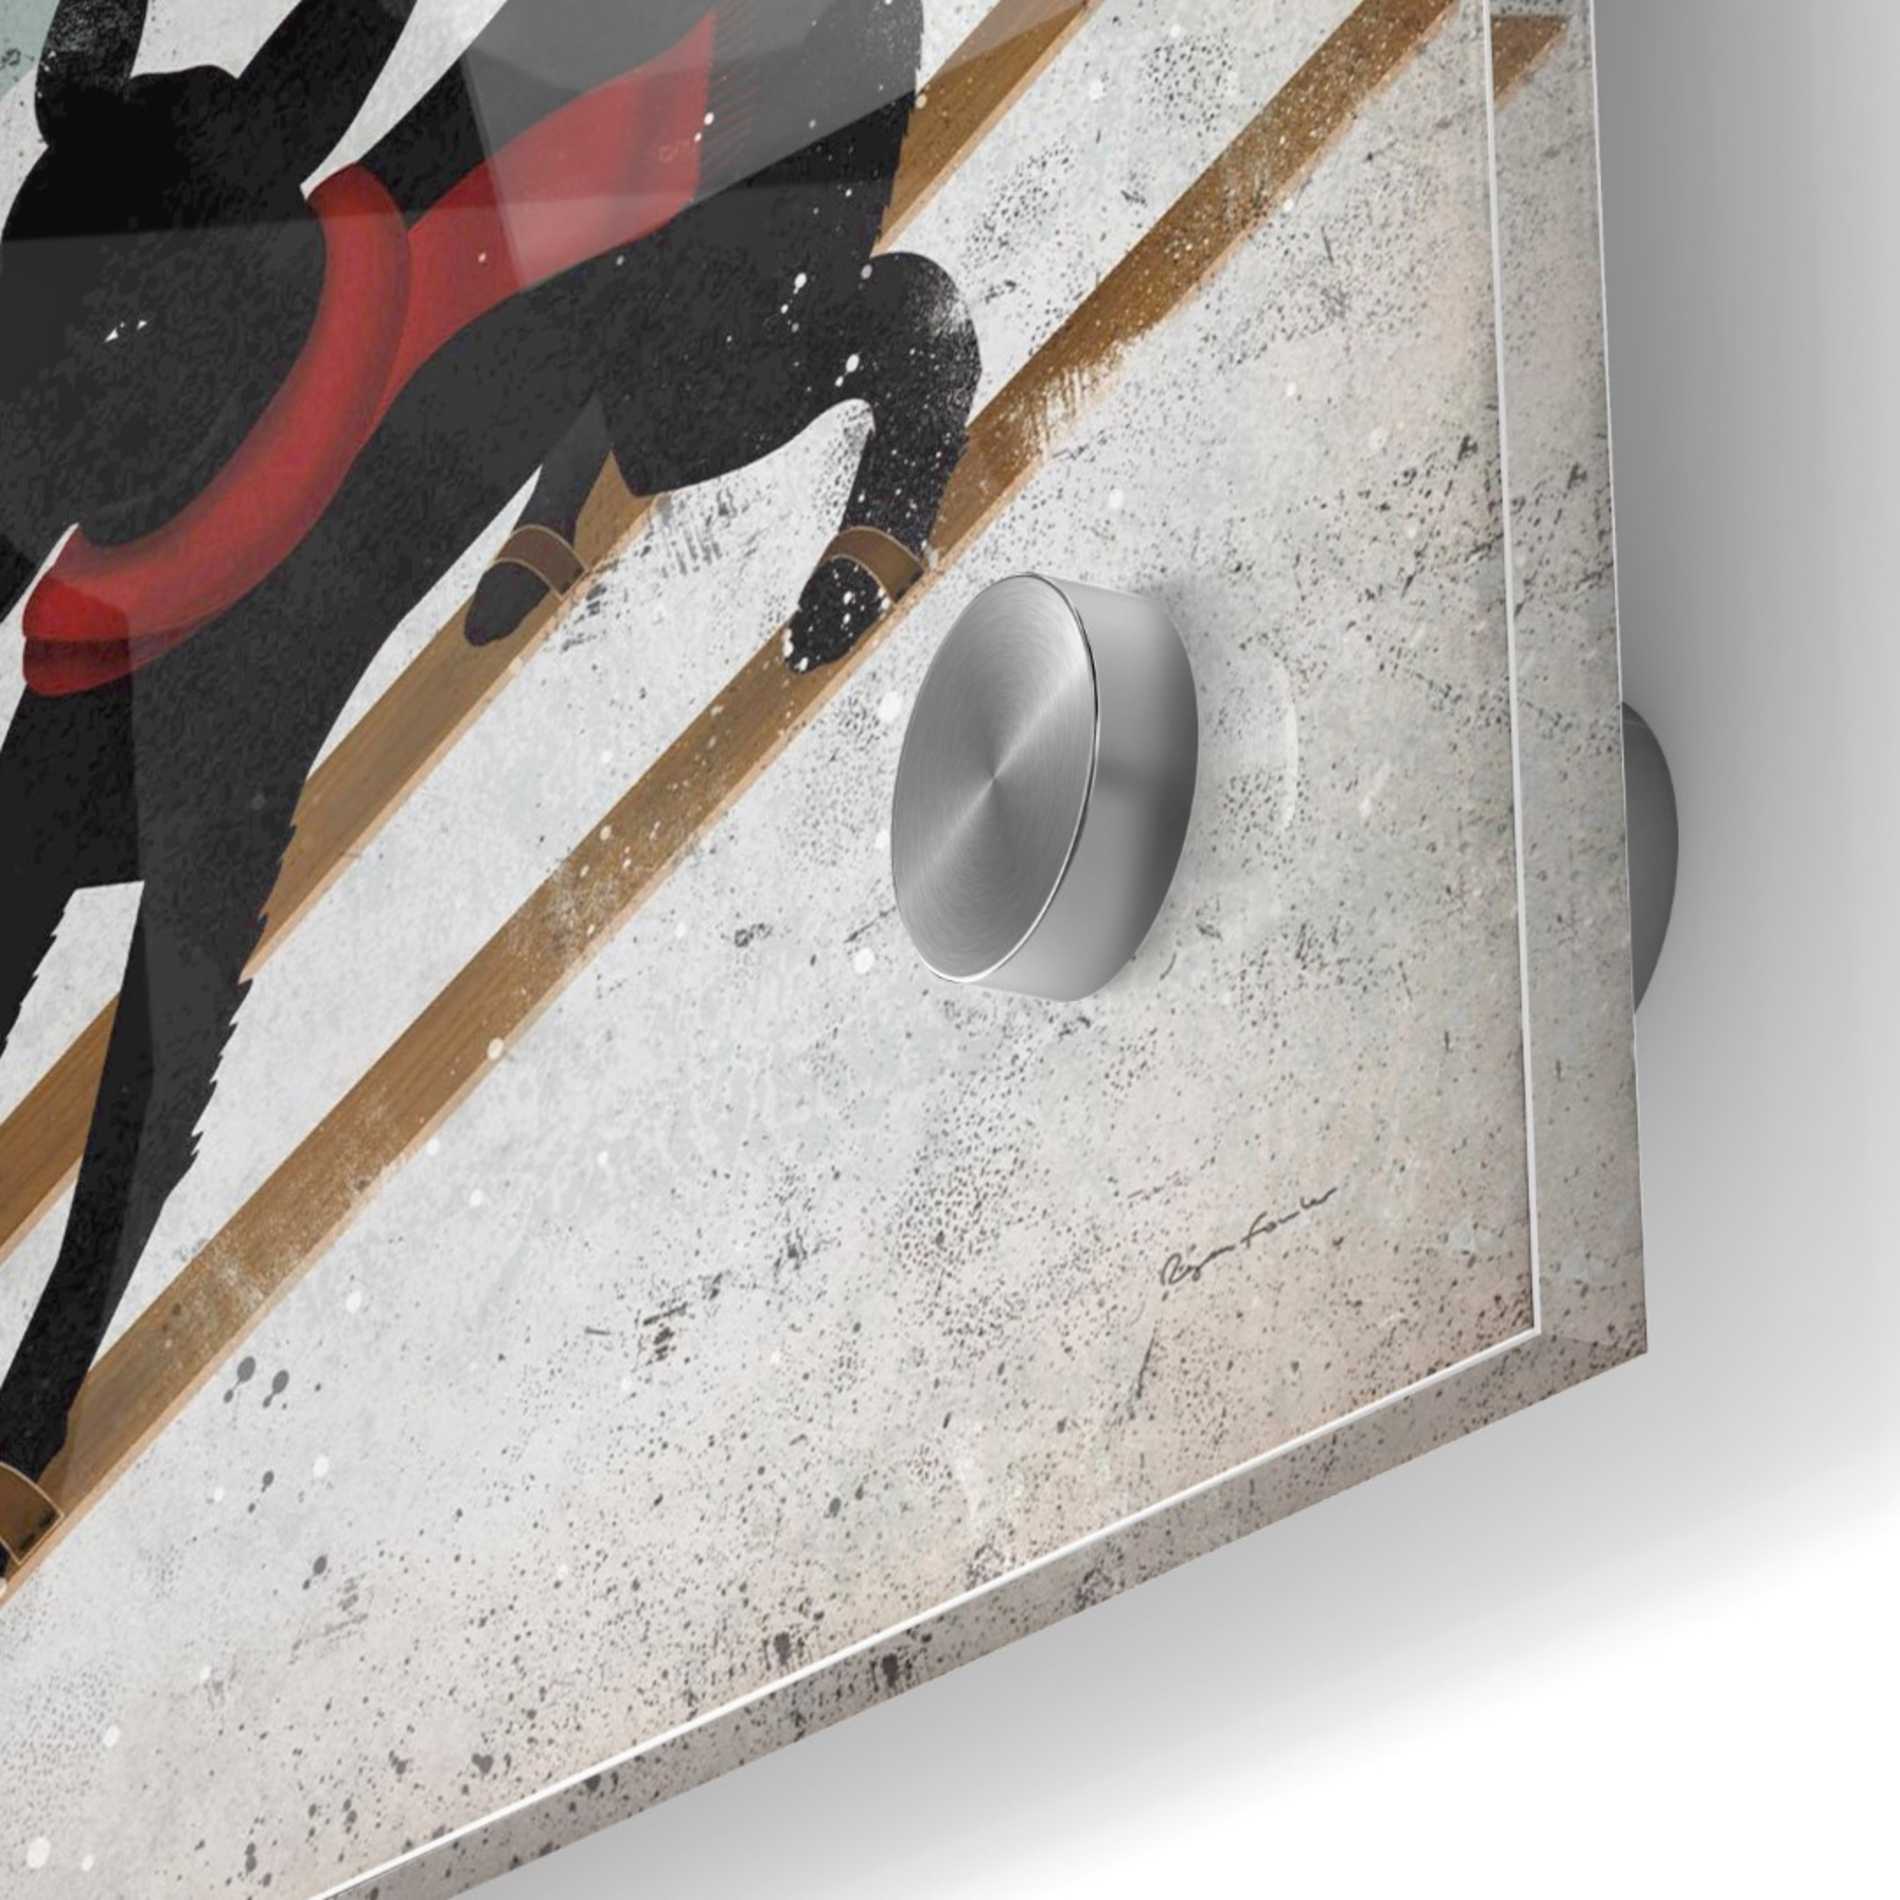 Epic Art 'Black Dog Ski' by Ryan Fowler, Acrylic Glass Wall Art,24x24